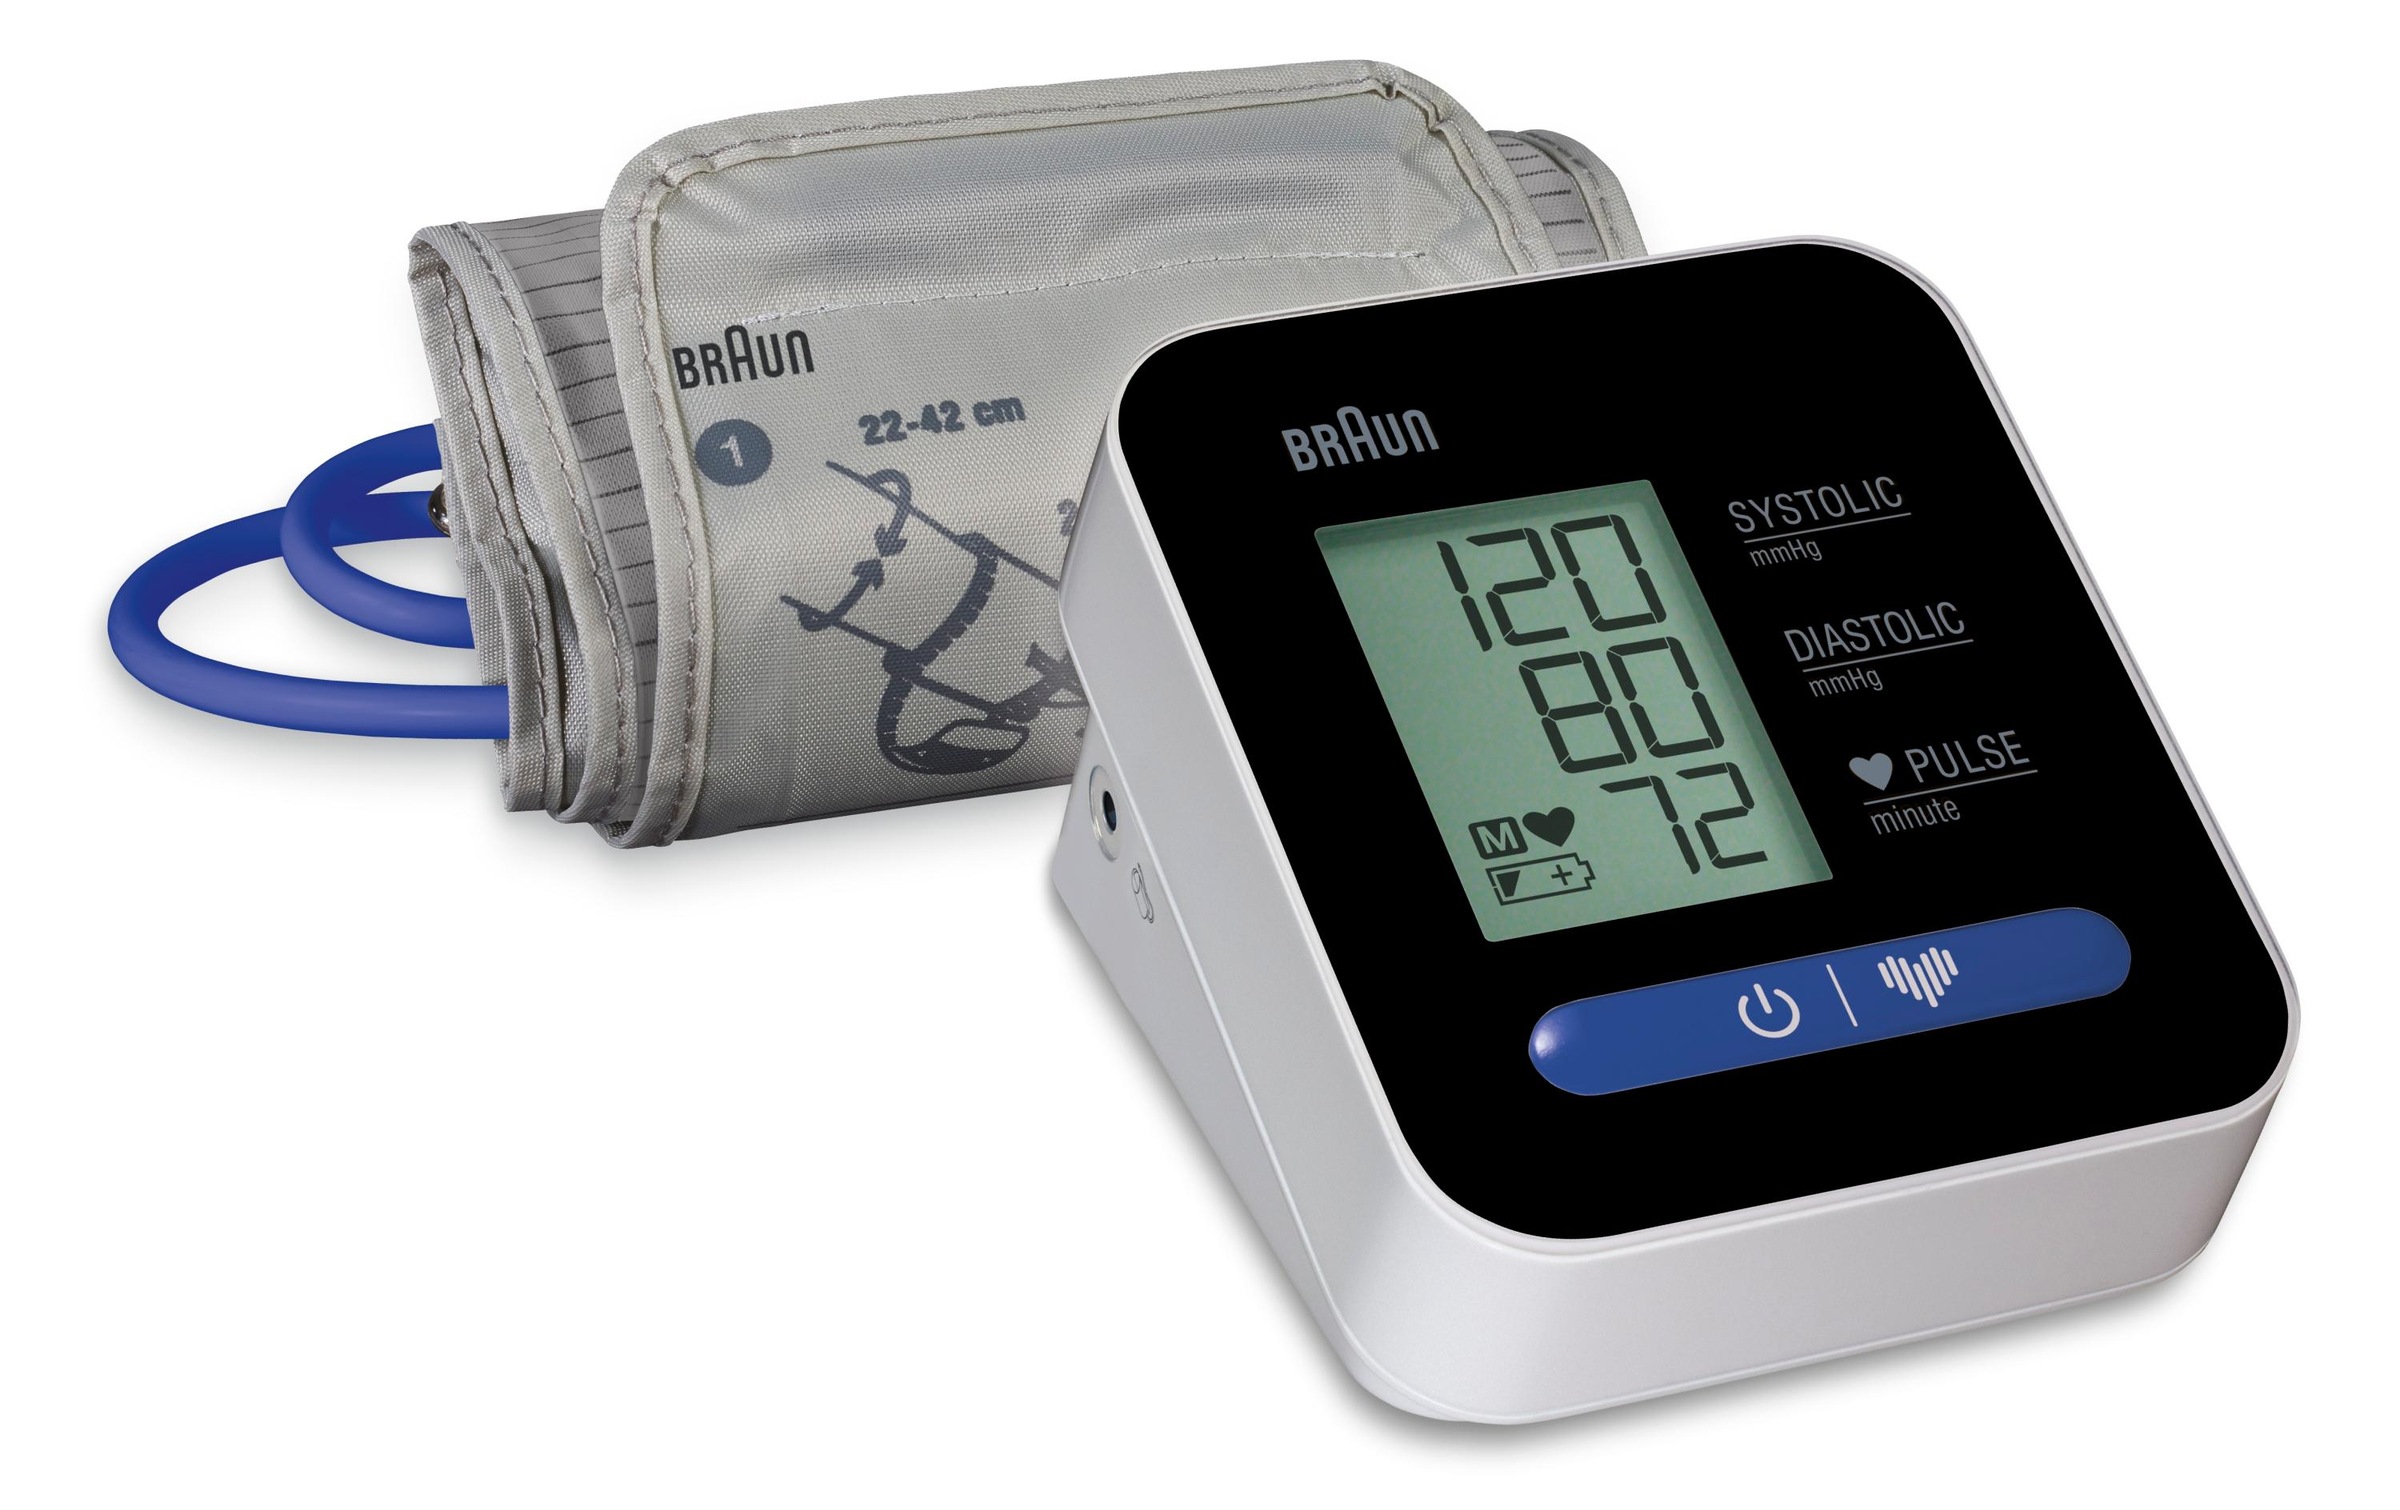 Braun Oberarm-Blutdruckmessgerät »ExactFit 1 BUA 5000«